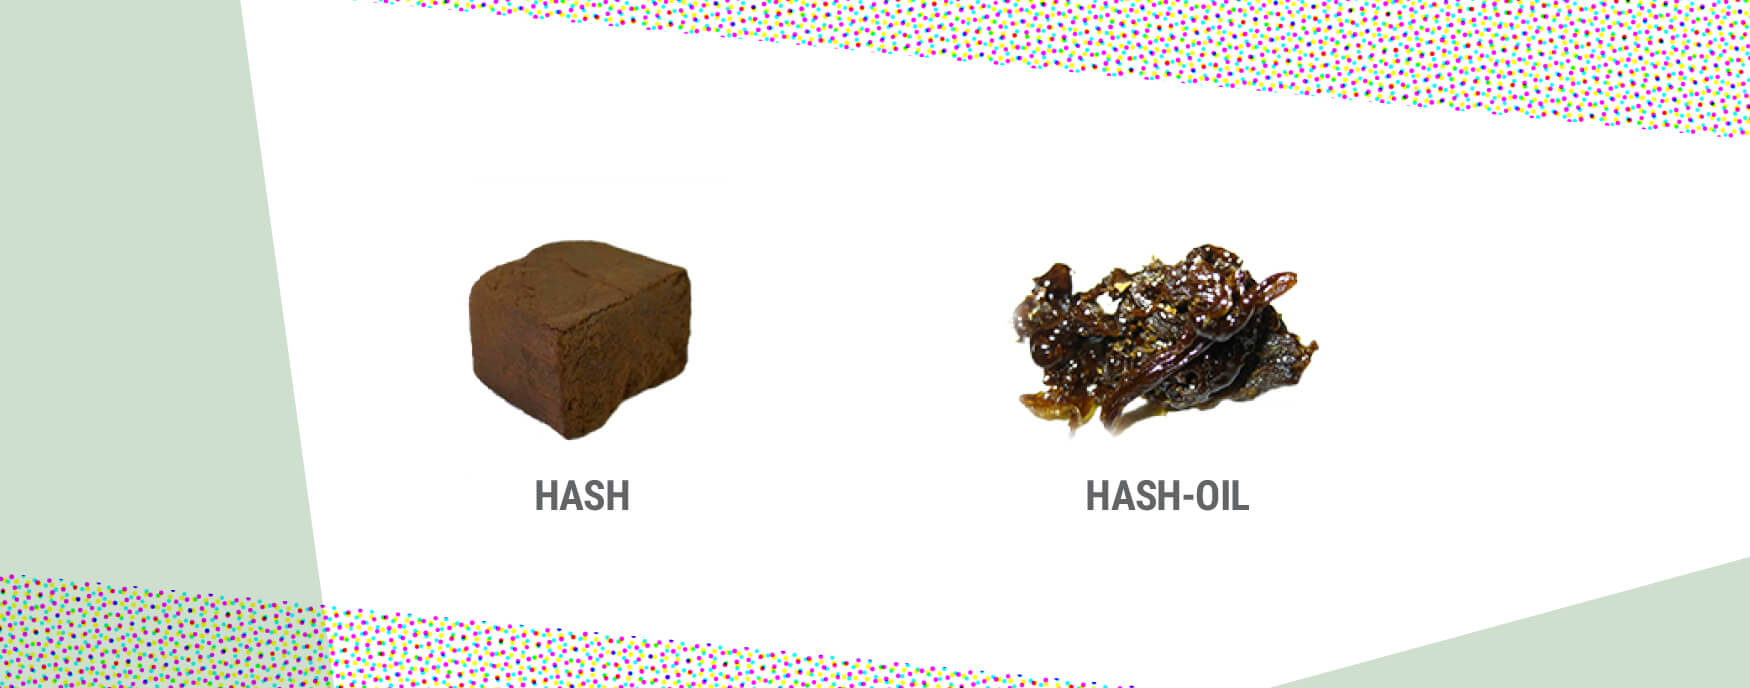 Hash and Hash-Oil